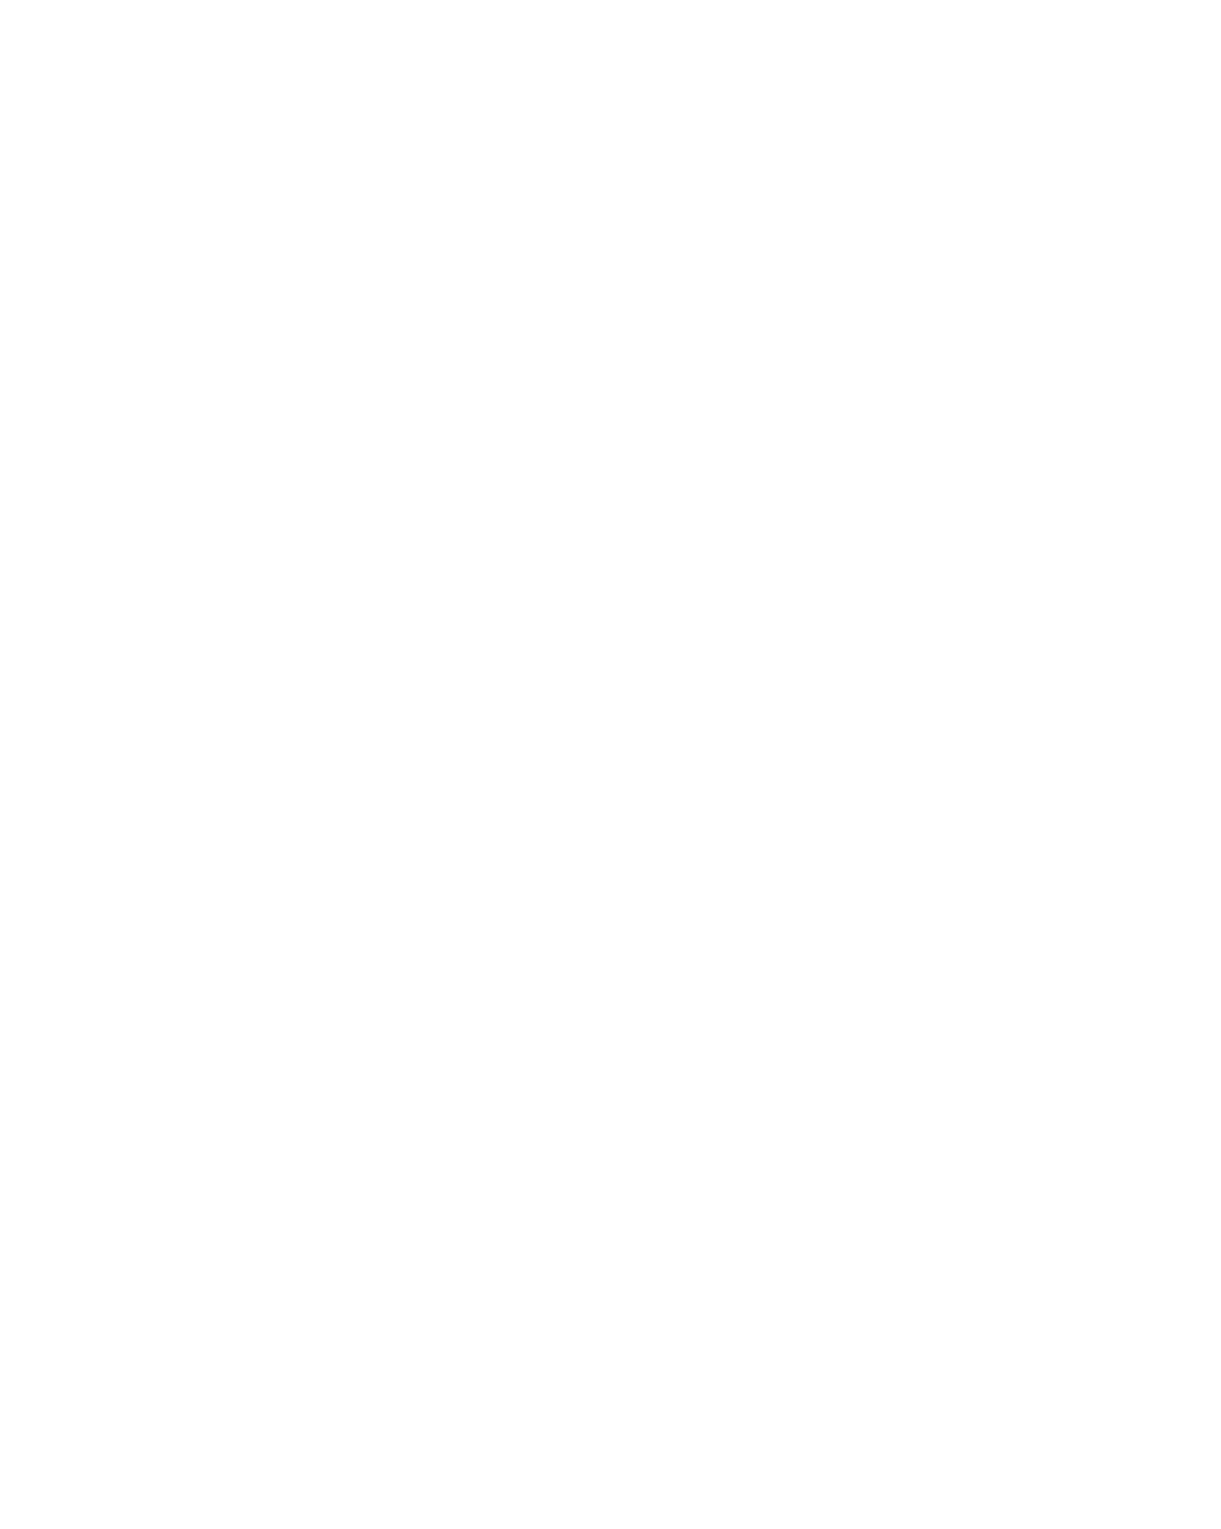 Dollar Industries logo for dark backgrounds (transparent PNG)